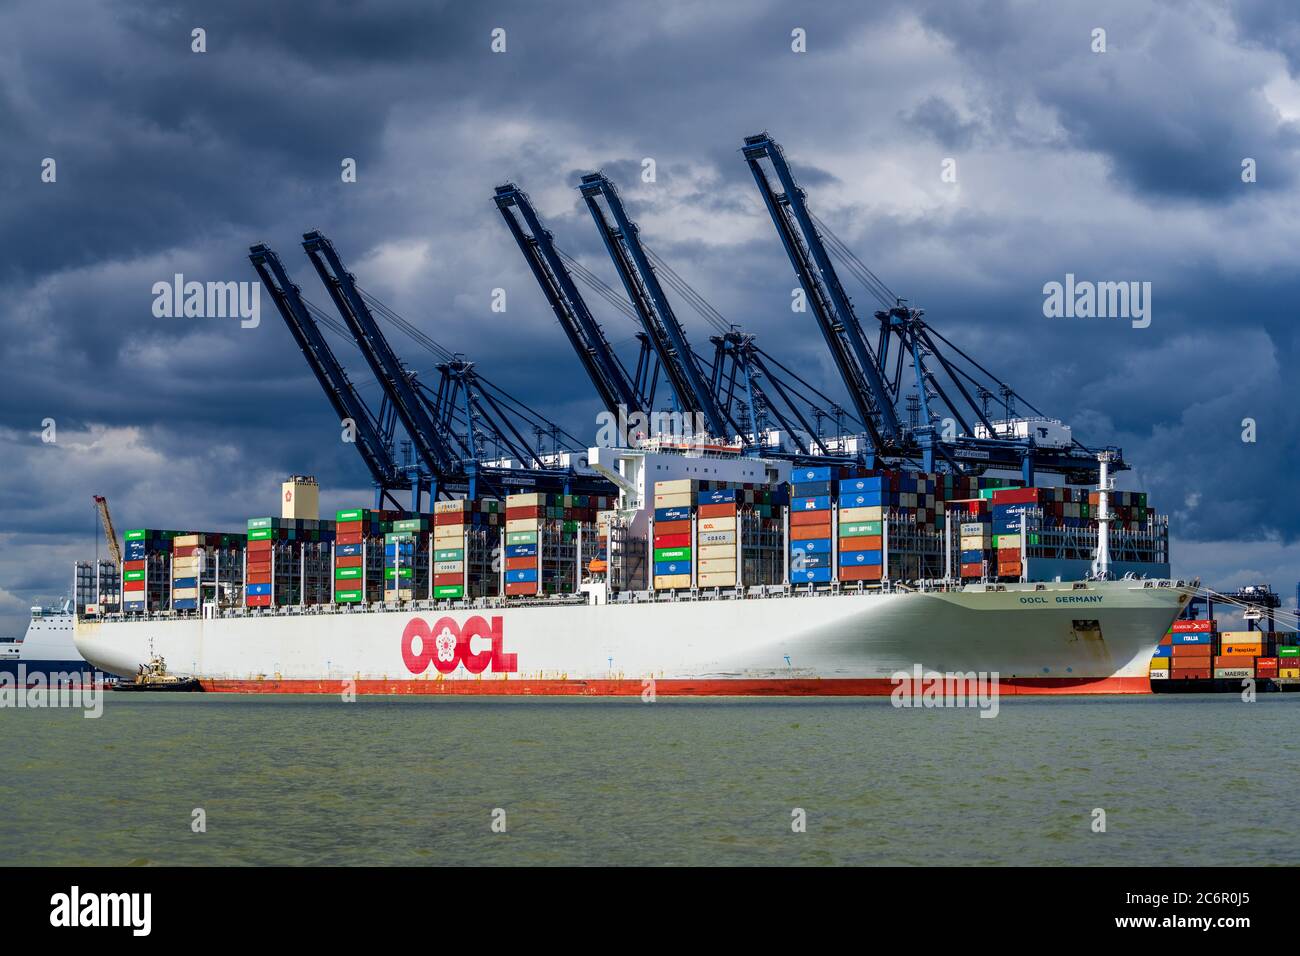 OOCL Germania Container Ship - OOCL Container Ship OOOCL Germania scarica i contenitori a Felixstowe Port, UK. OOCL è una linea di spedizione basata su Hong Kong. Foto Stock